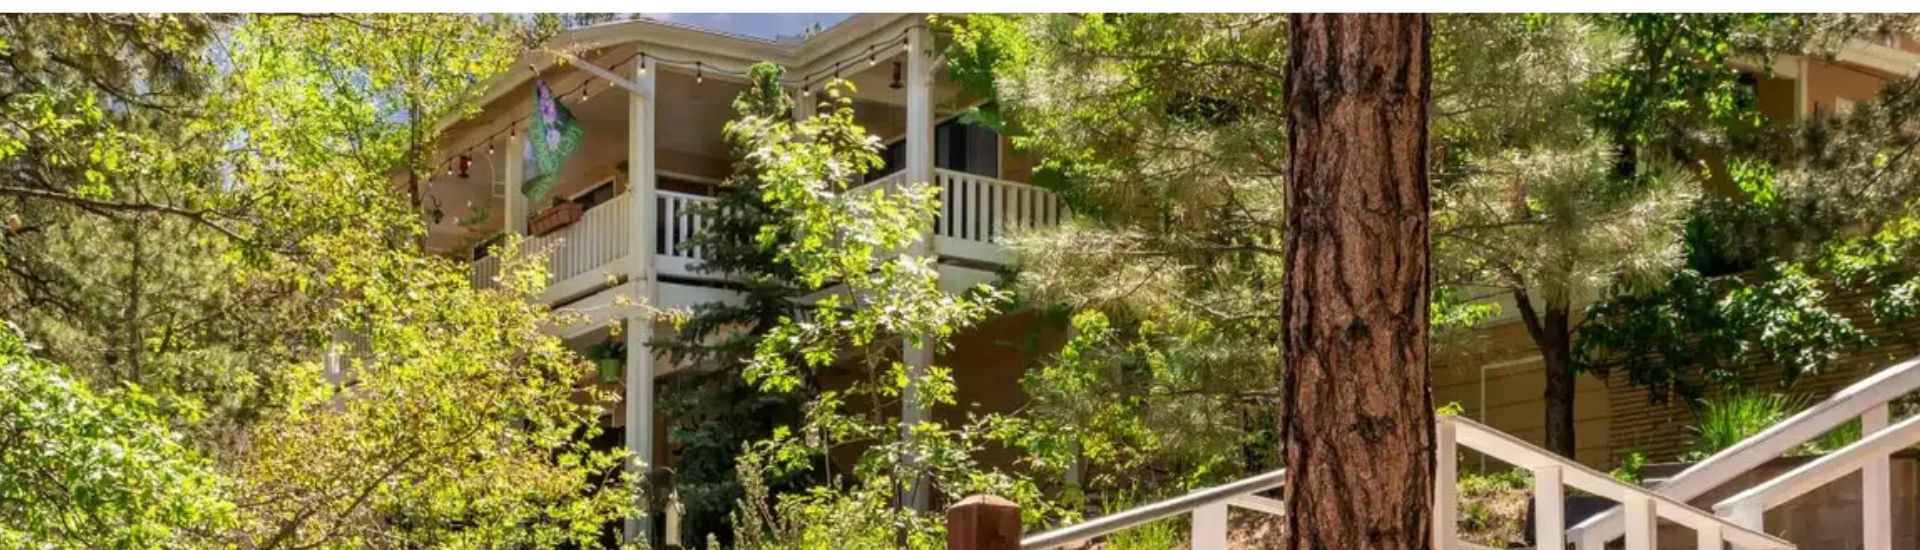 Multi-story inn set among trees with staircases outdoors - The Sheridan House Inn, Williams, AZ